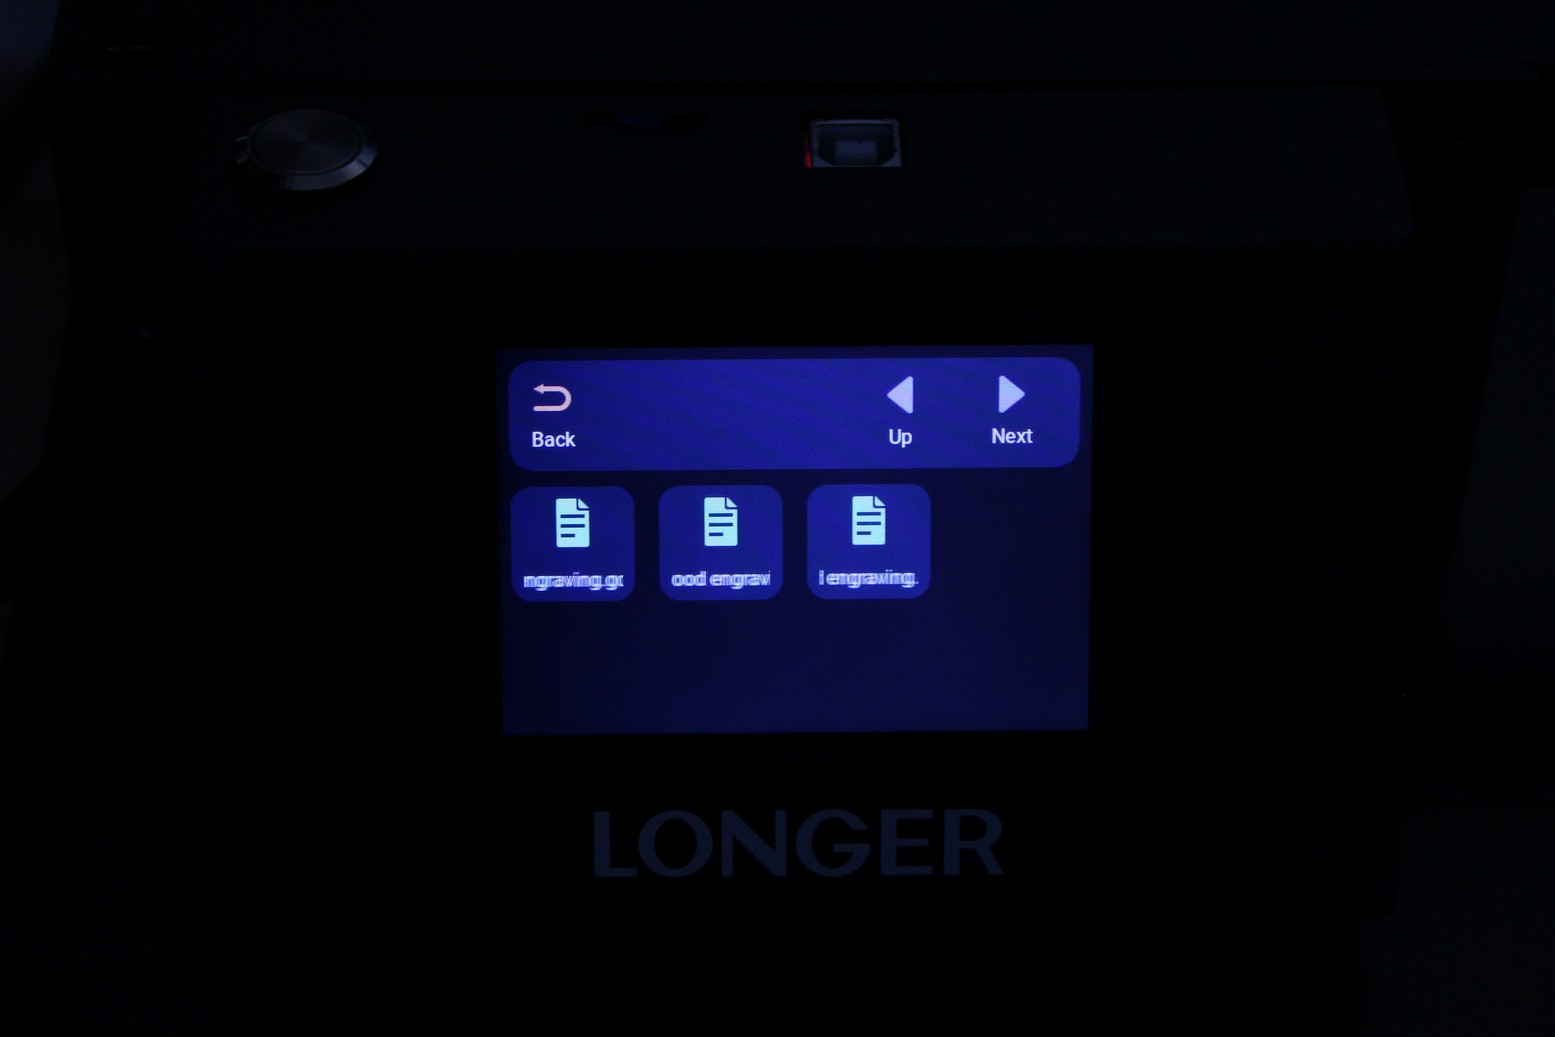 LONGER RAY5 Touchscreen Interface 5 | LONGER RAY5 Laser Engraver Review